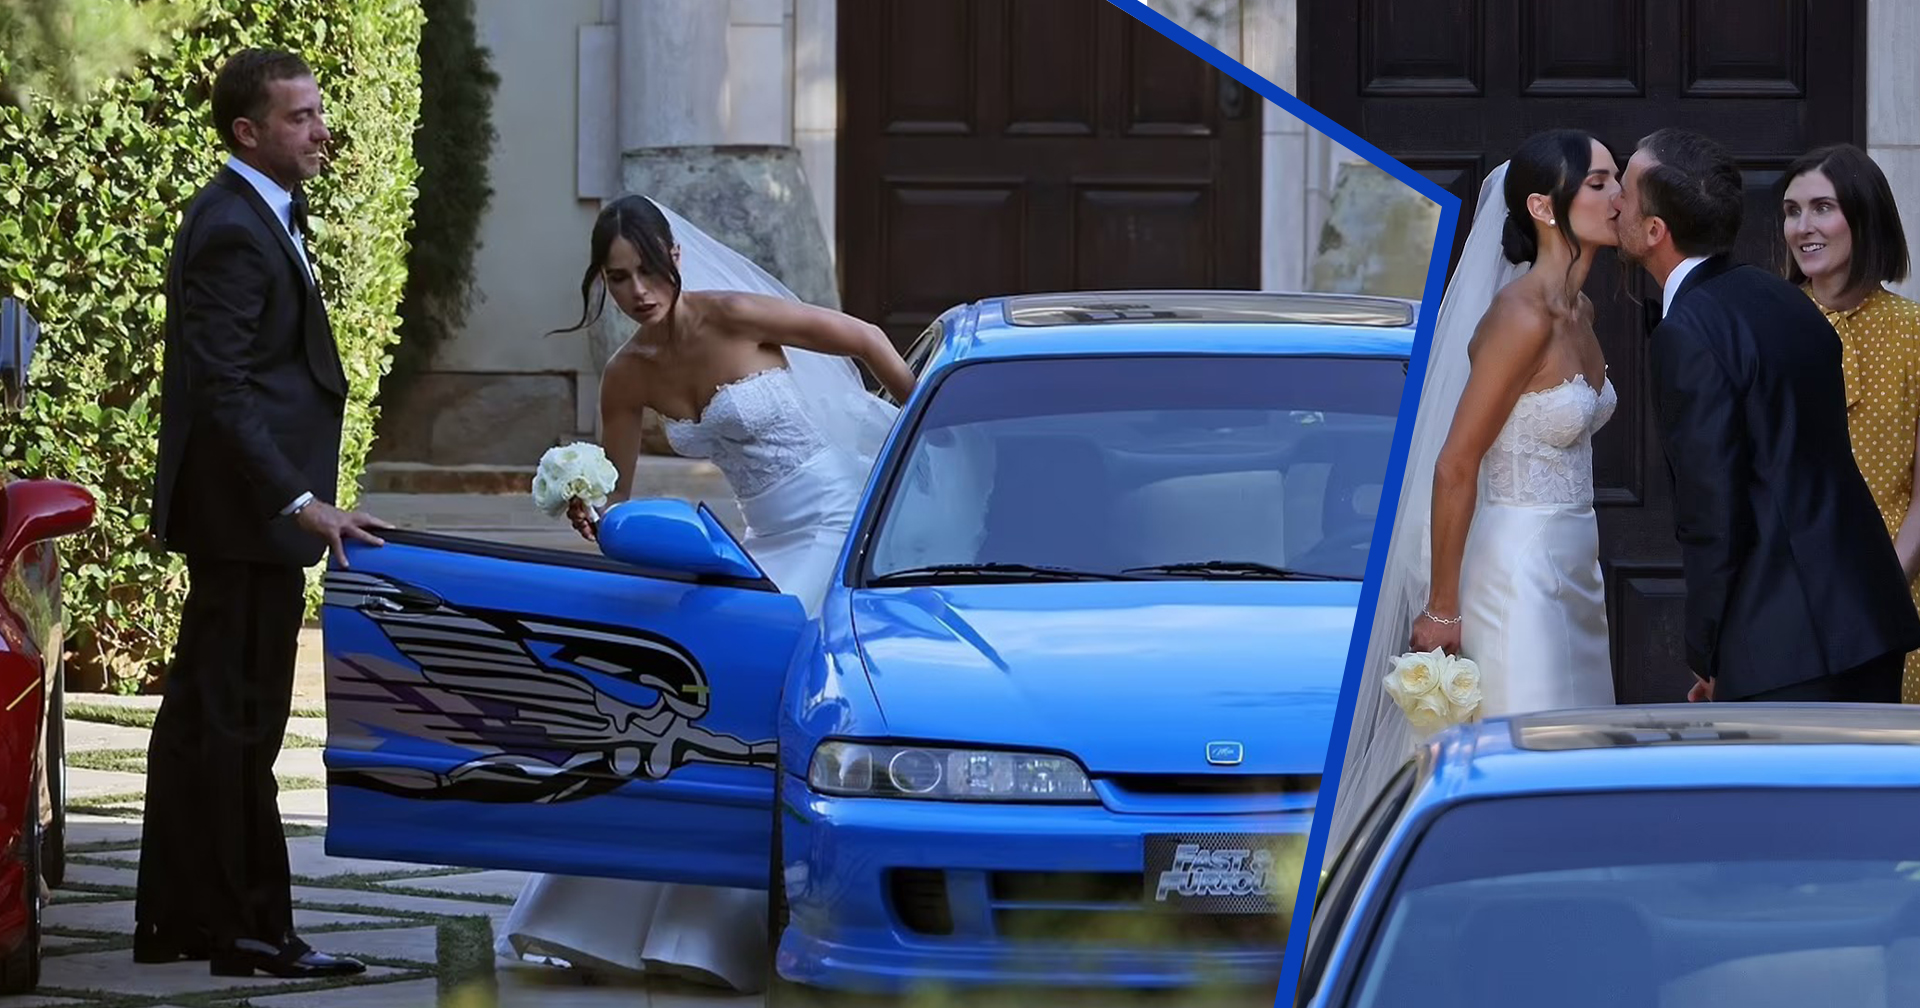 Jordana Brewster ทำเก๋ ขึ้นรถยนต์ ‘มีอา โทเร็ตโต’ จากหนัง ‘Fast & Furious’ กลางงานแต่งงานกับนักธุรกิจหนุ่ม